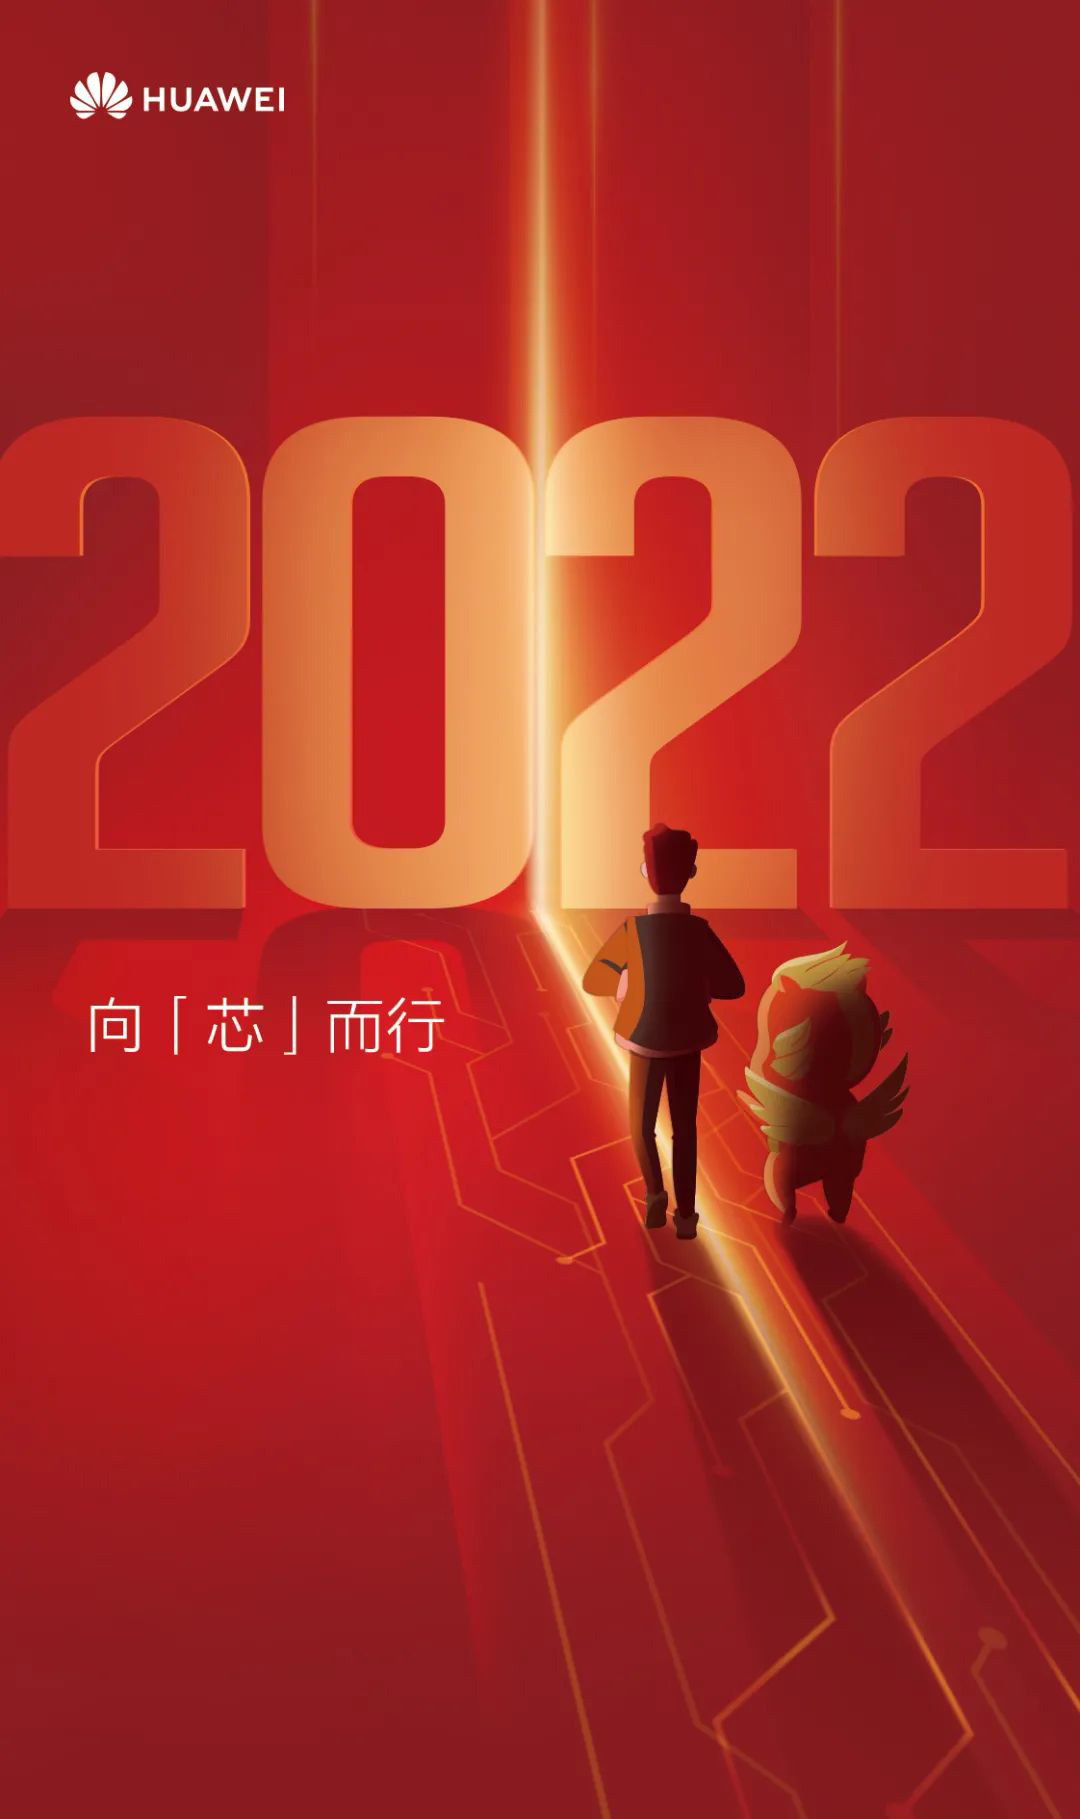 Huawei Kirin welcomes 2022